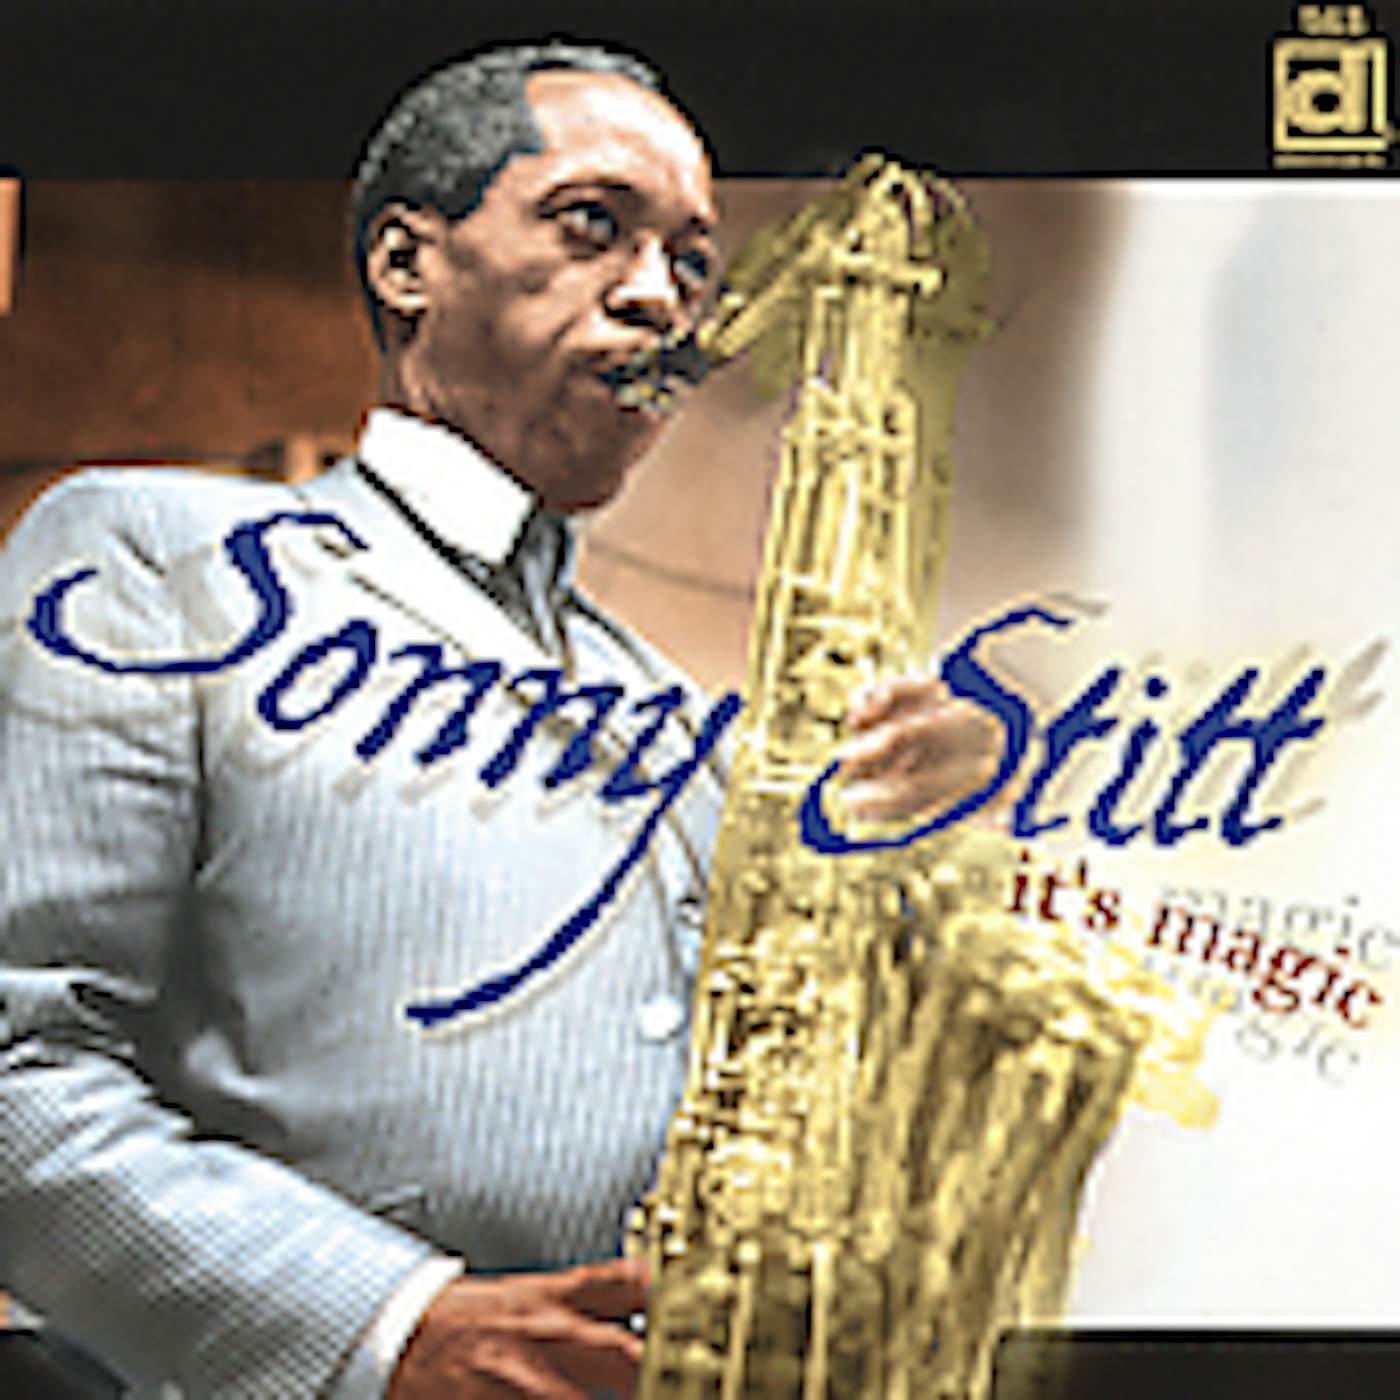 Sonny Stitt IT'S MAGIC CD